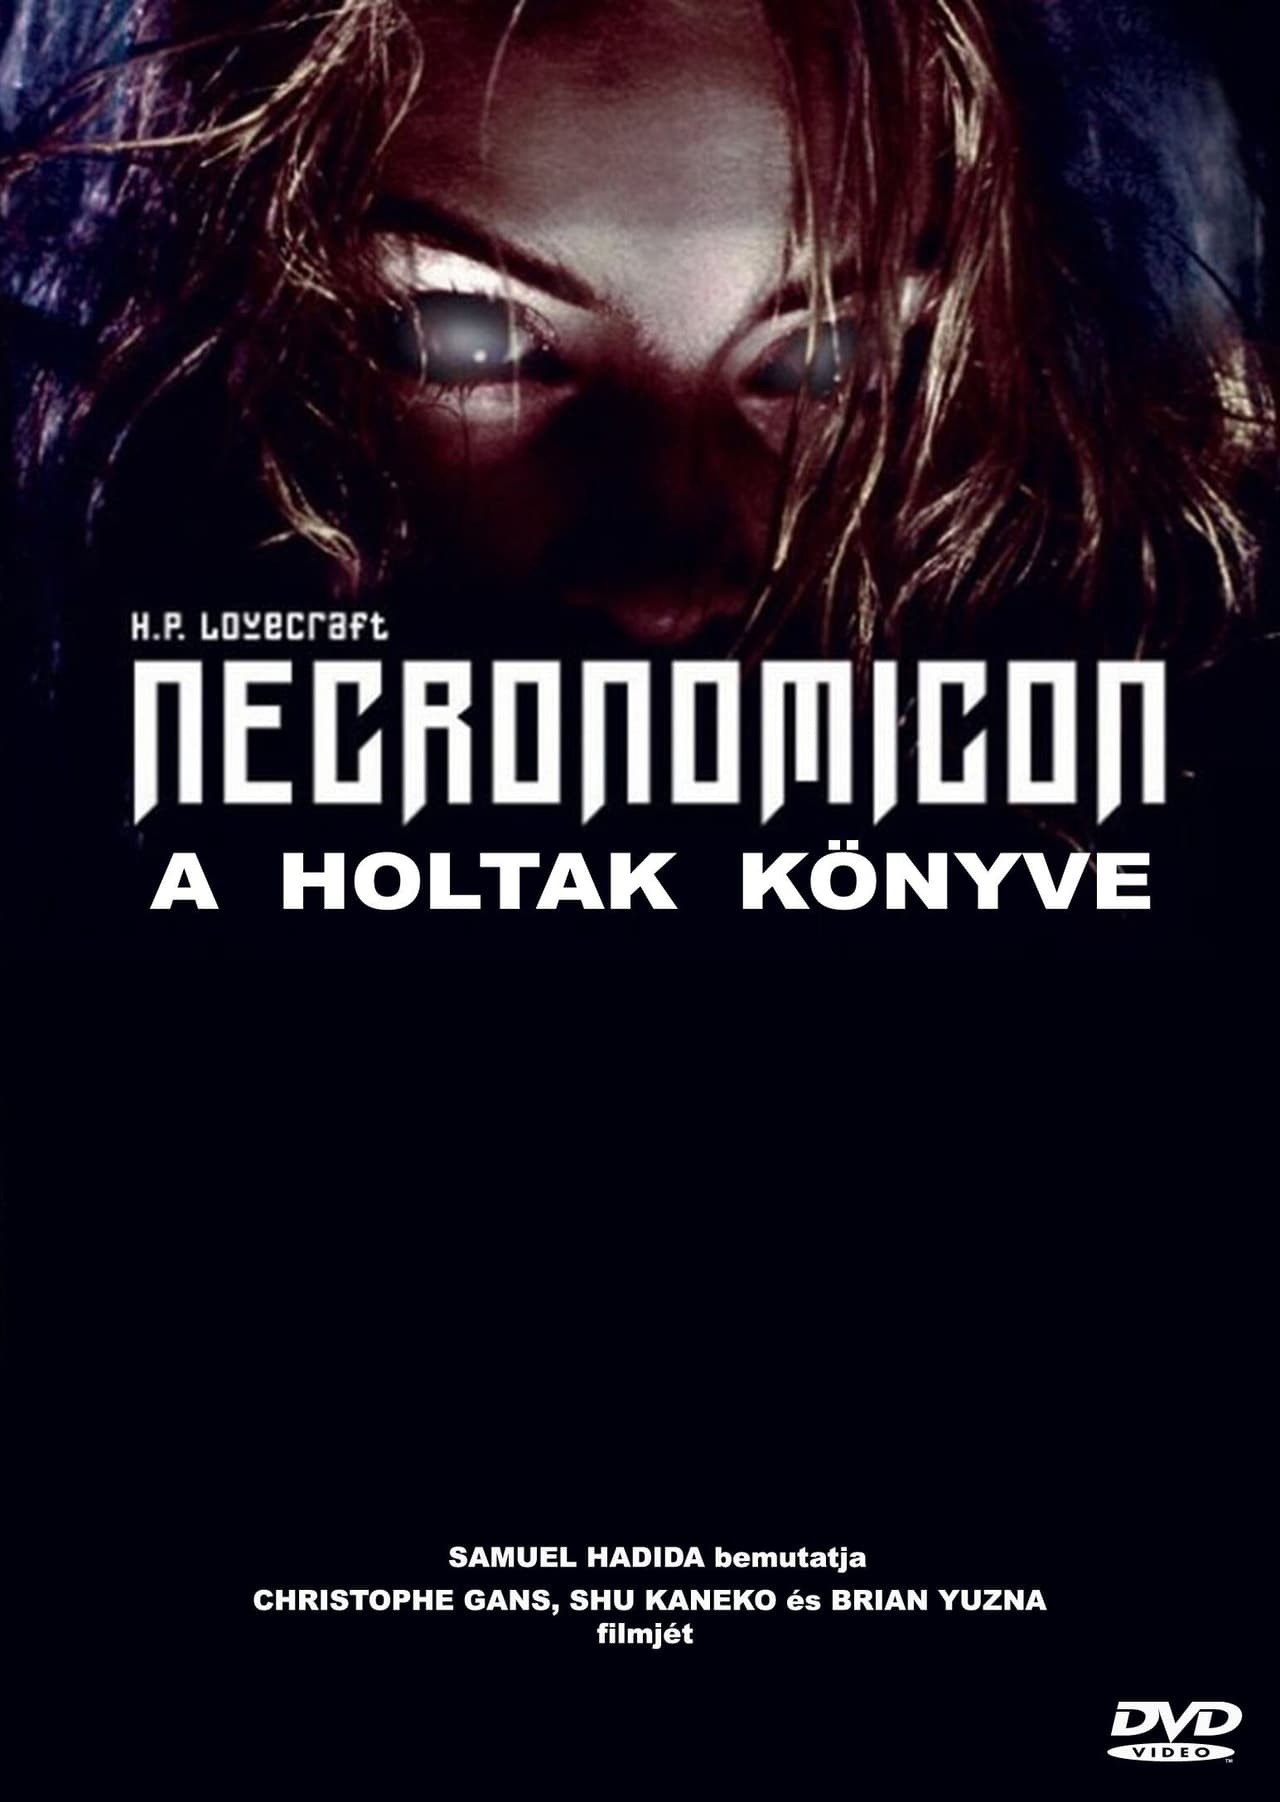 Necrnomicon - A holtak könyve (1993) online teljes film